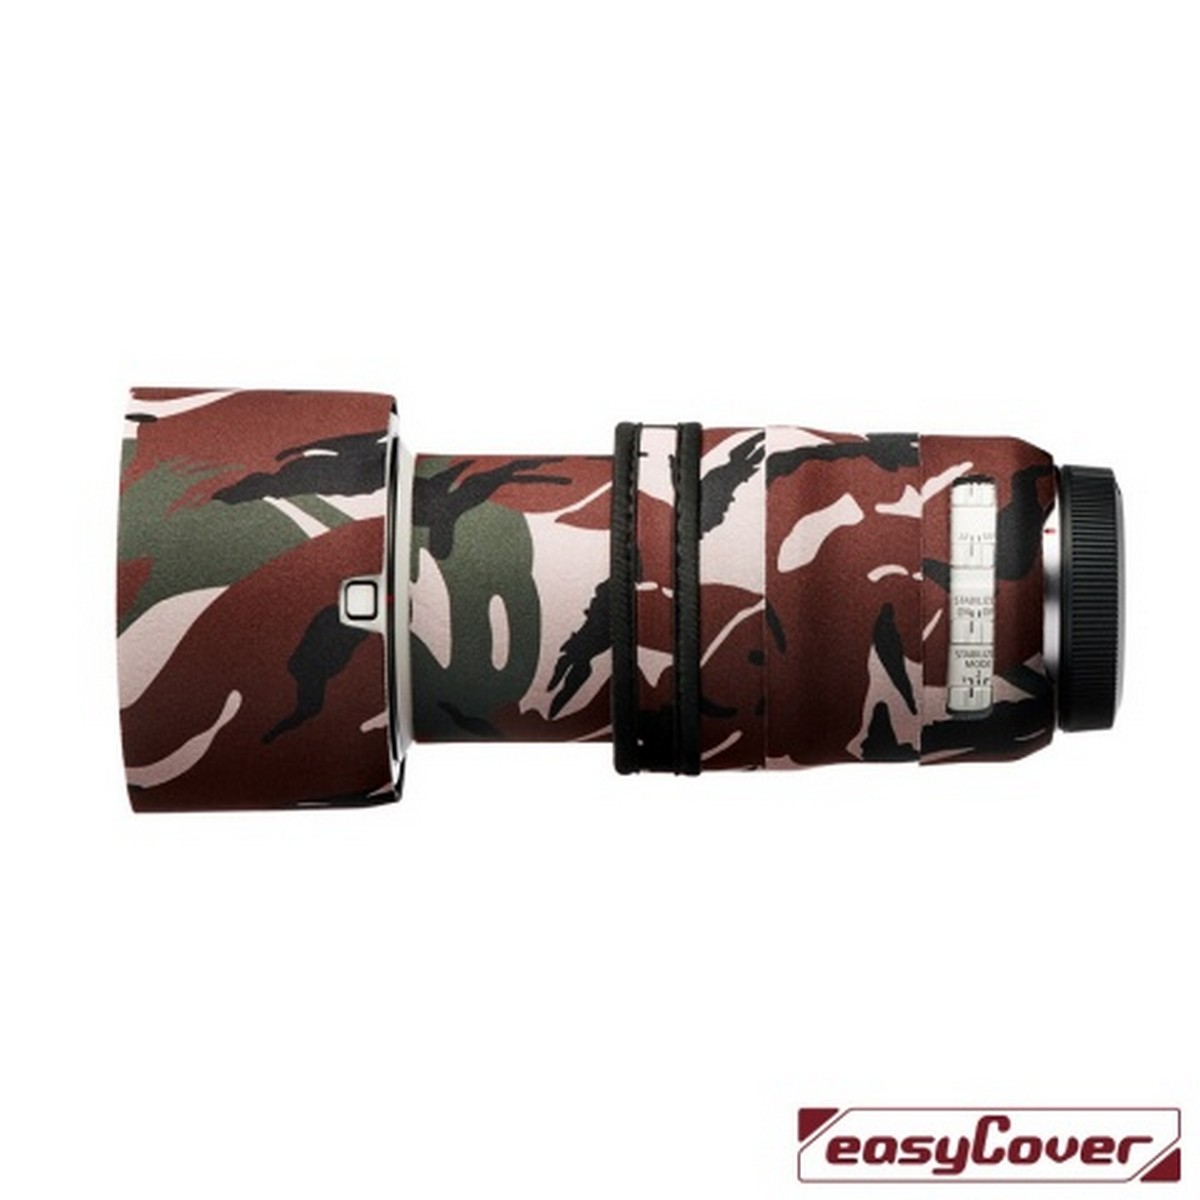 Easycover Lens Oak für Canon RF 70-200 mm 1:4L IS USM Grün Camouflage 